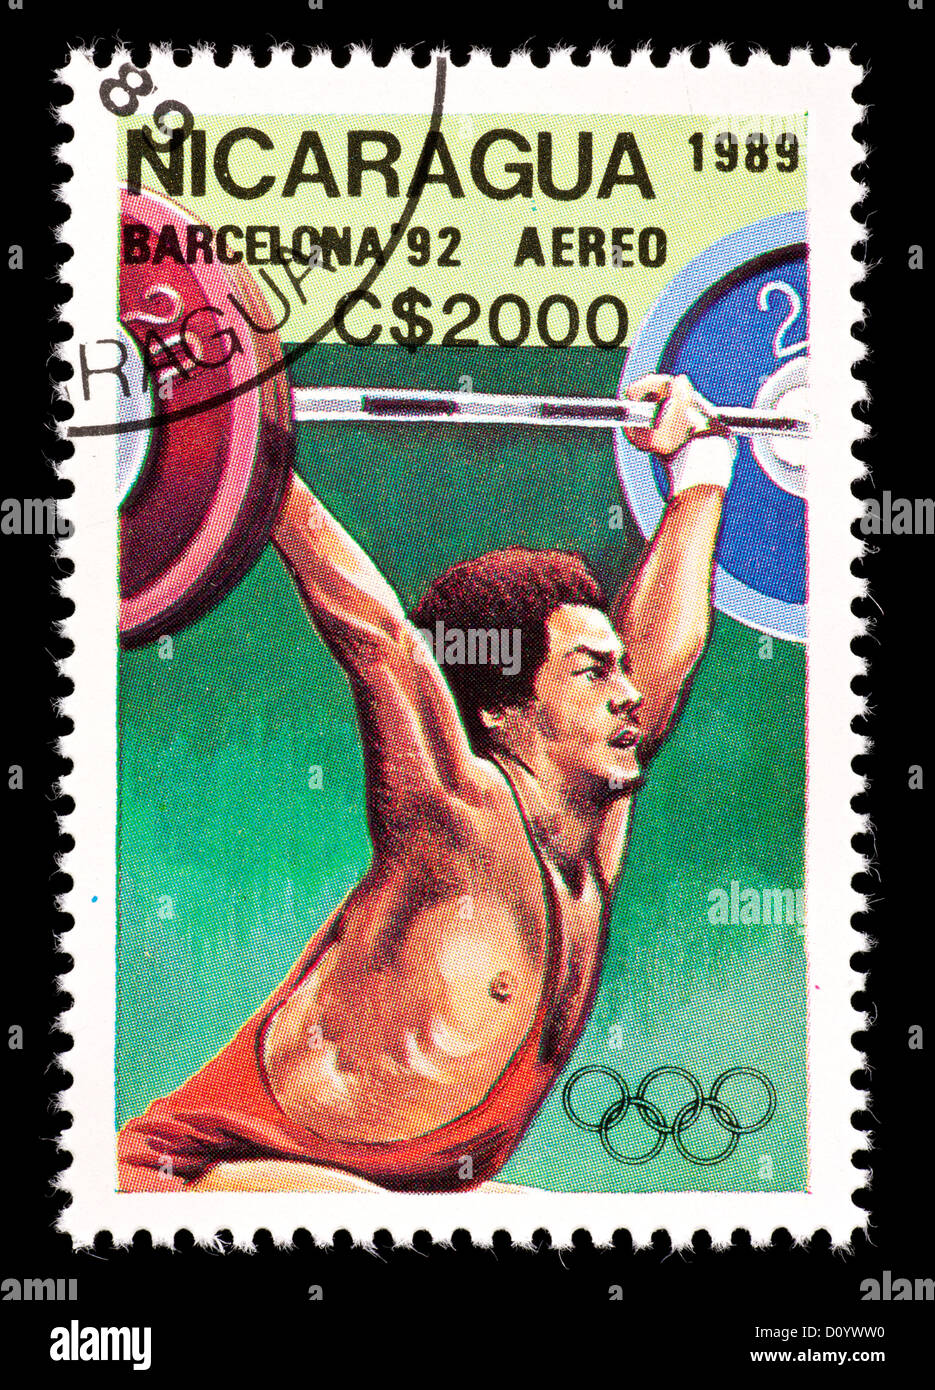 Brazil Stamp 2306-2308 - 92 Olympics